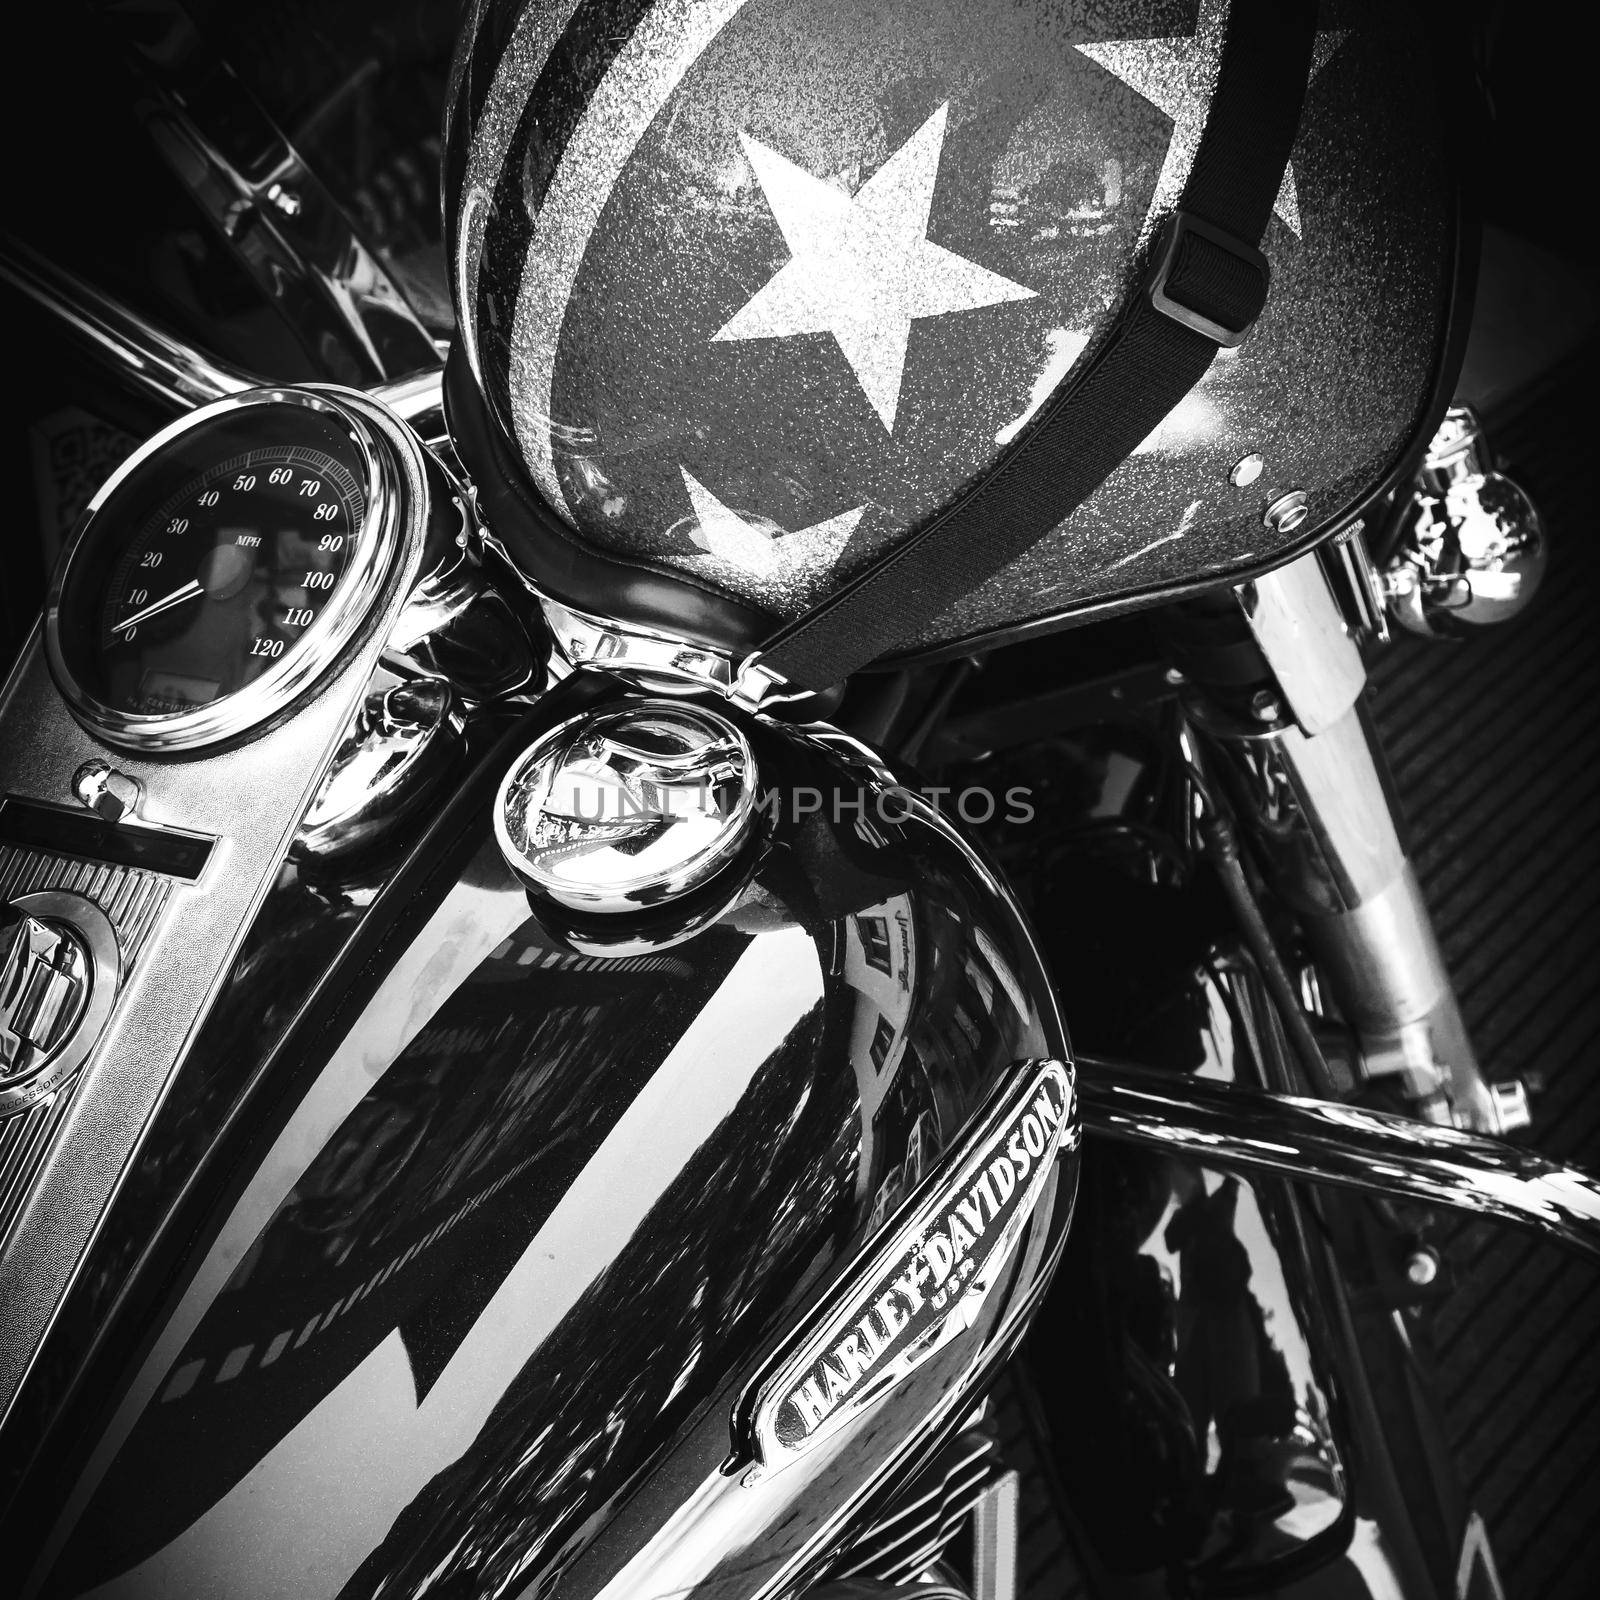 Logo of Harley Davidson motorcycles on a tank and italian helmet. Jesolo (VE), ITALY - July 29, 2017.